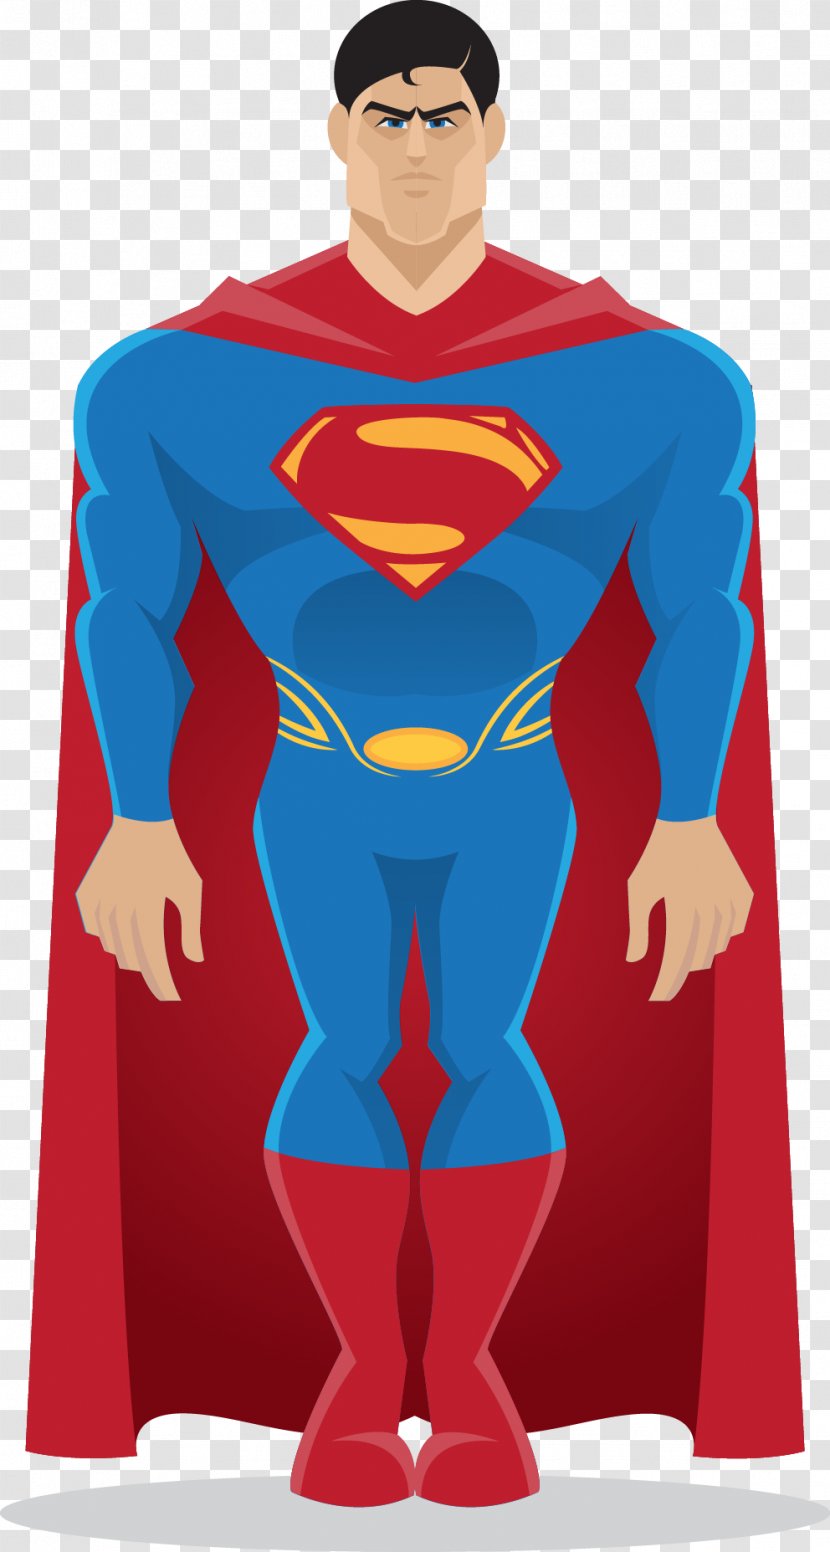 Clark Kent Batman Superhero Illustration - Character - Superman Transparent PNG